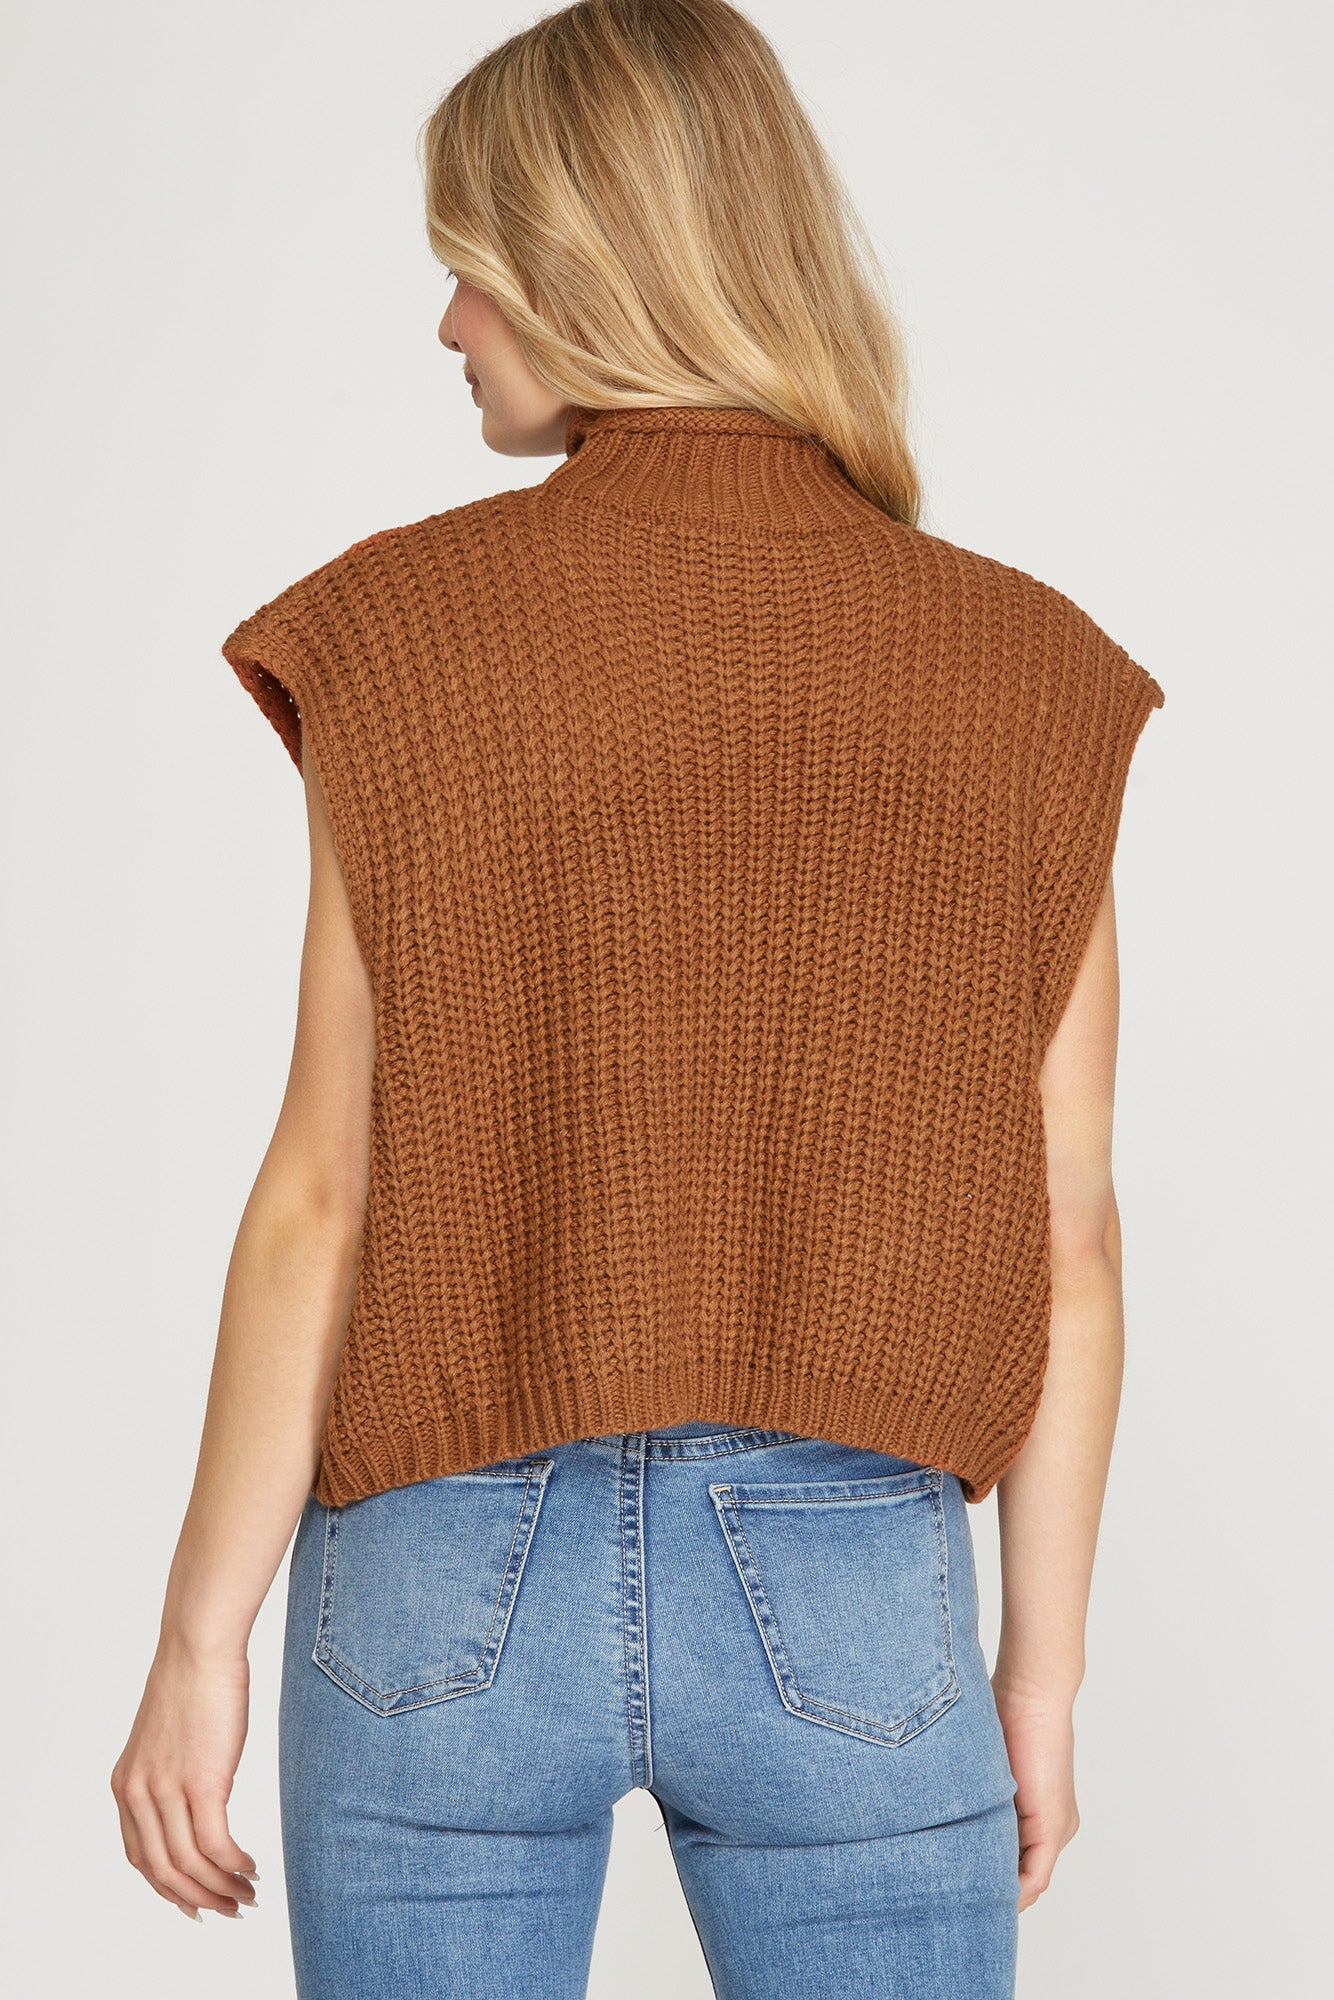 Caramel Sleeveless Sweater Top